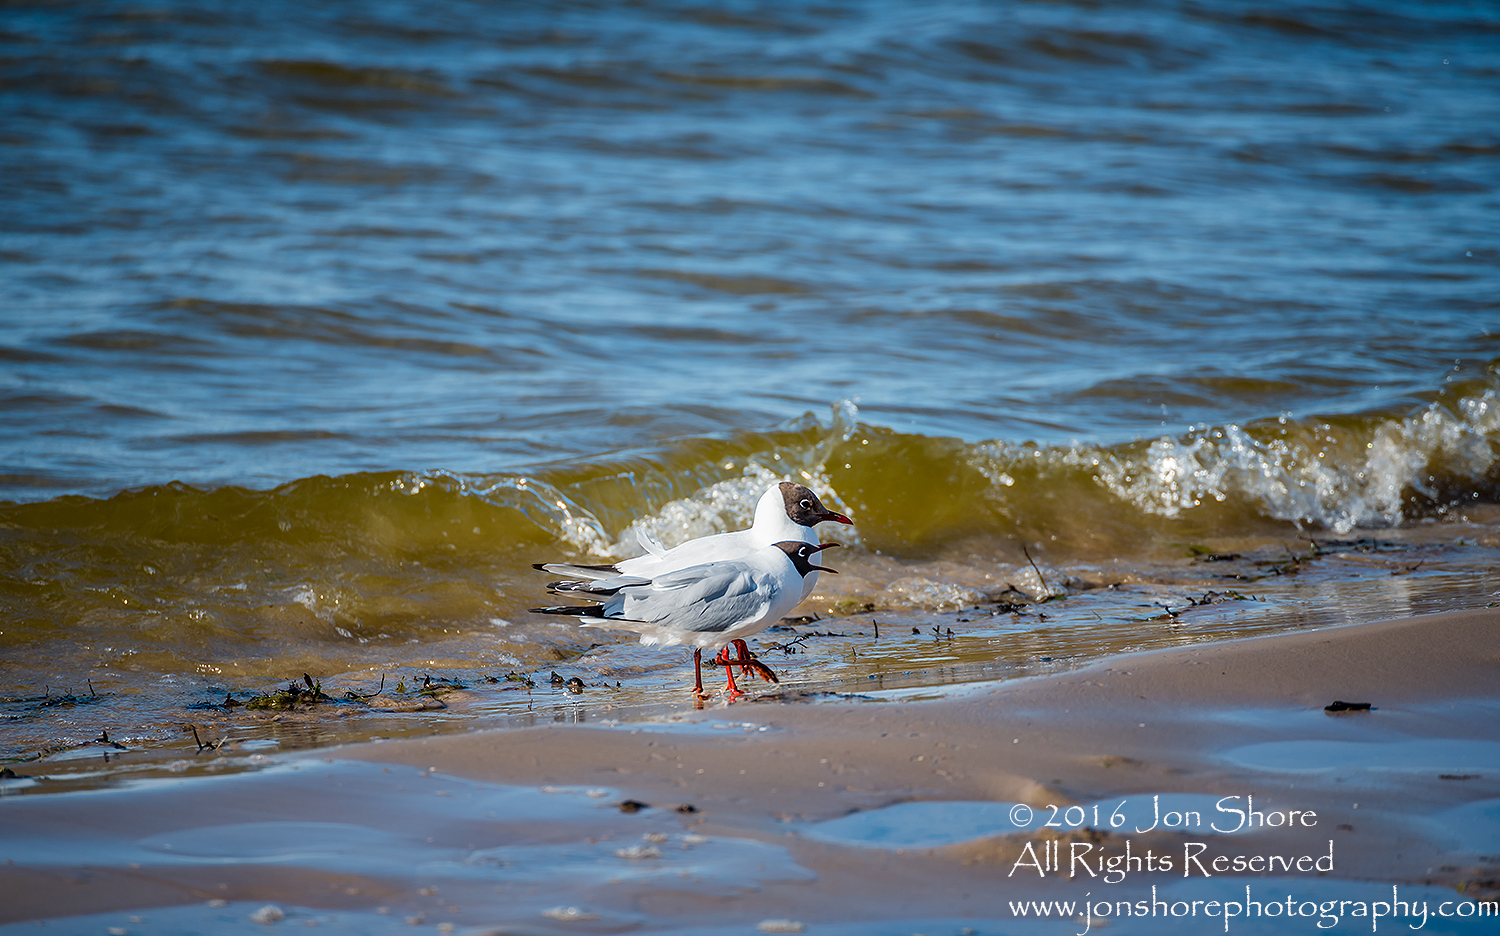 Two Seagulls walking along on Jurmala Latvia Beach. Tamron 300mm lens